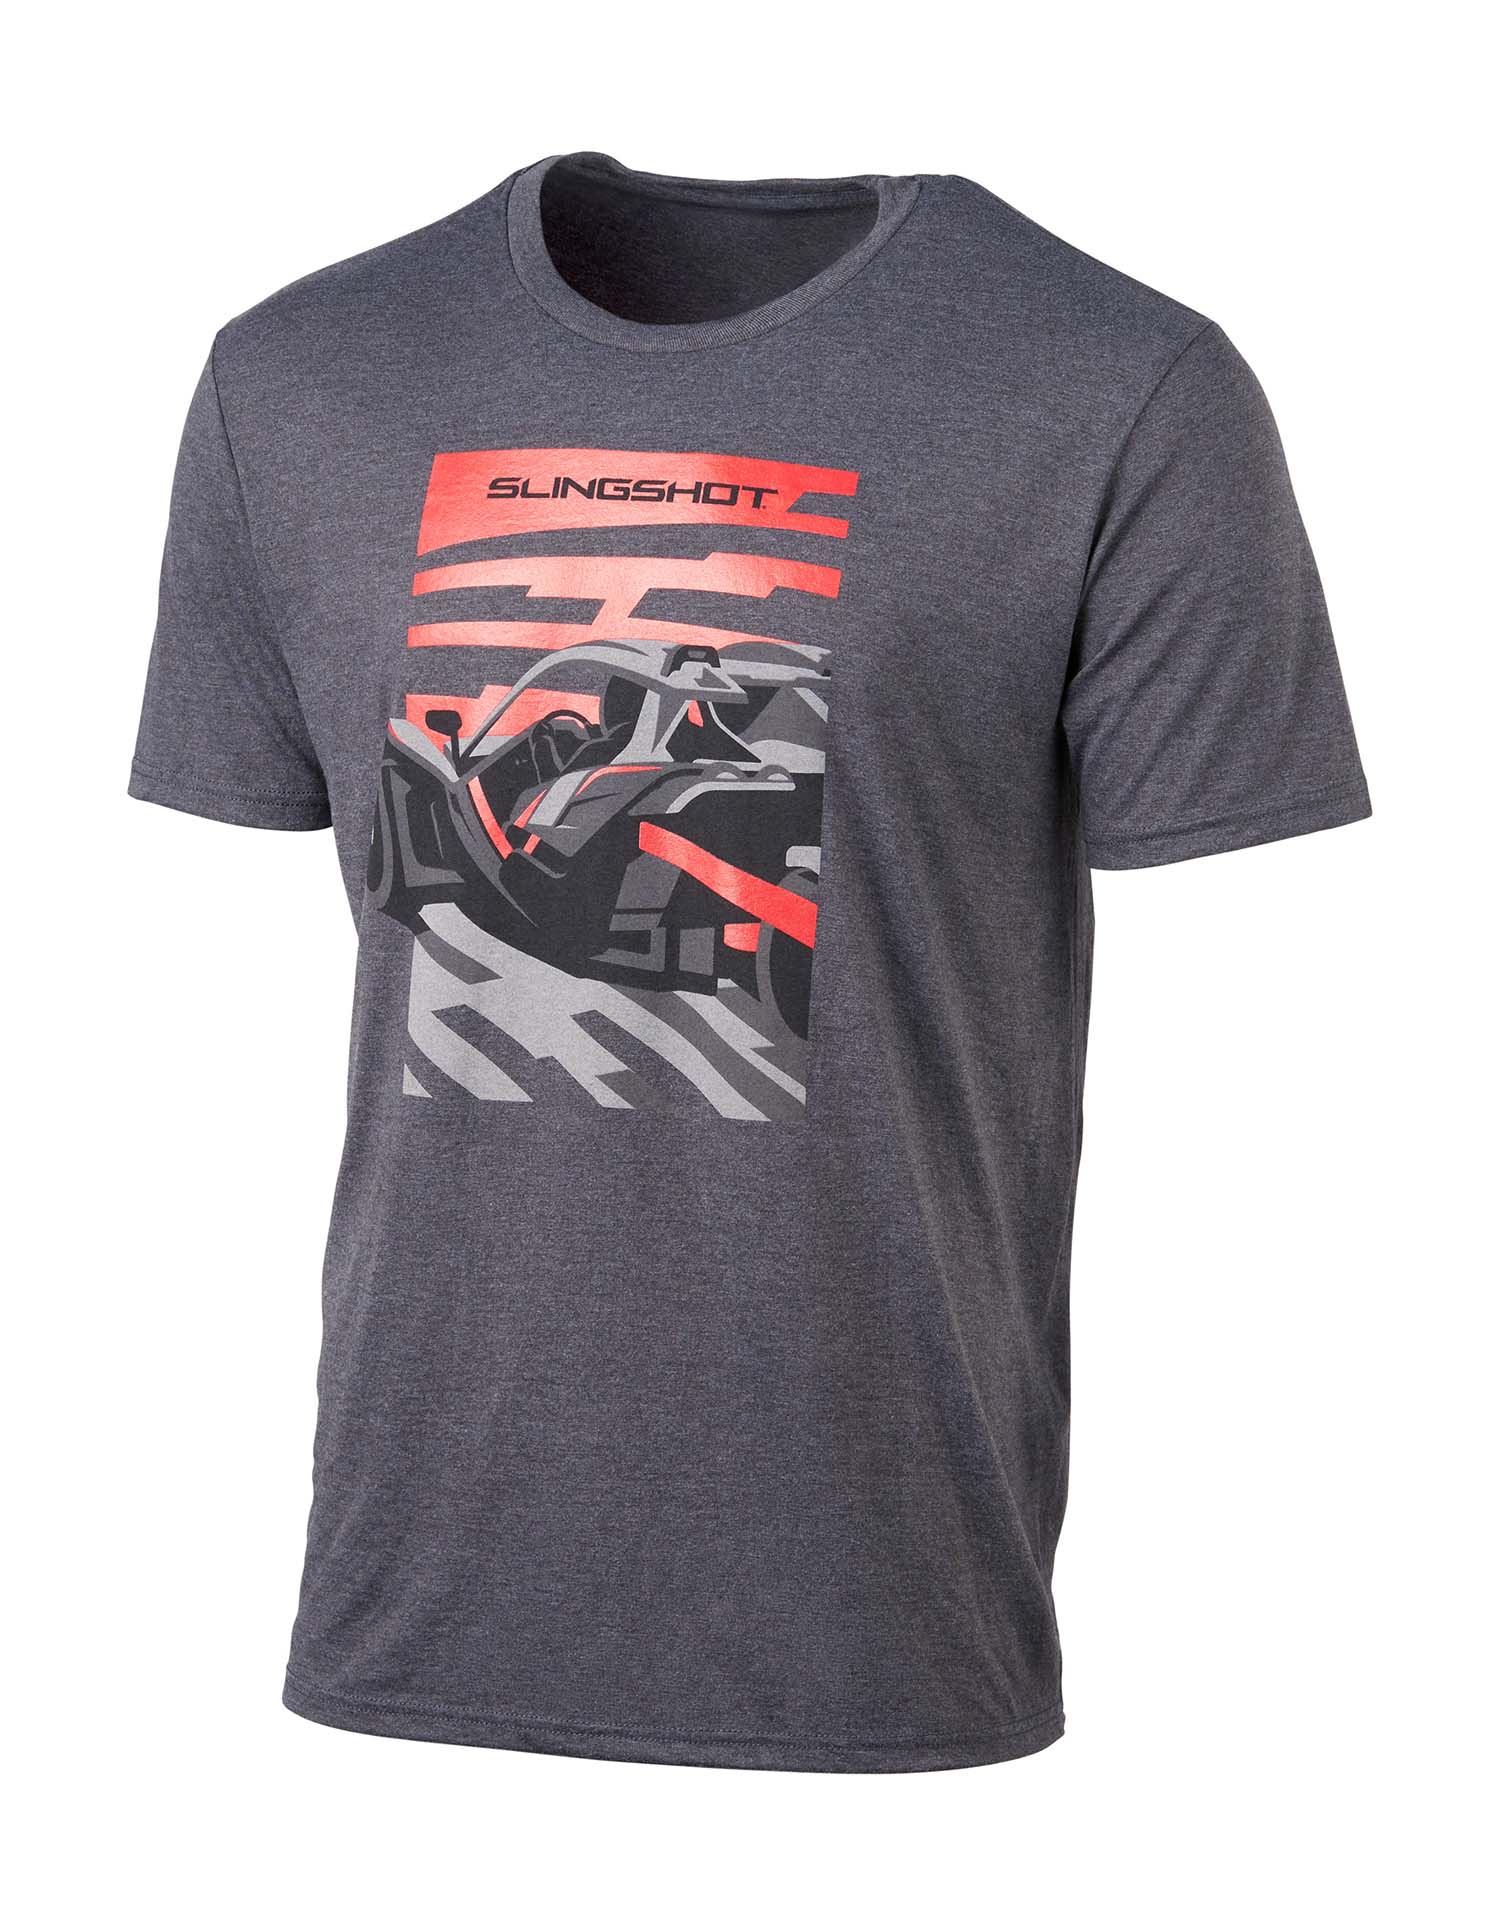 Polaris Slingshot Mens Short-Sleeve Adventure T-Shirt 